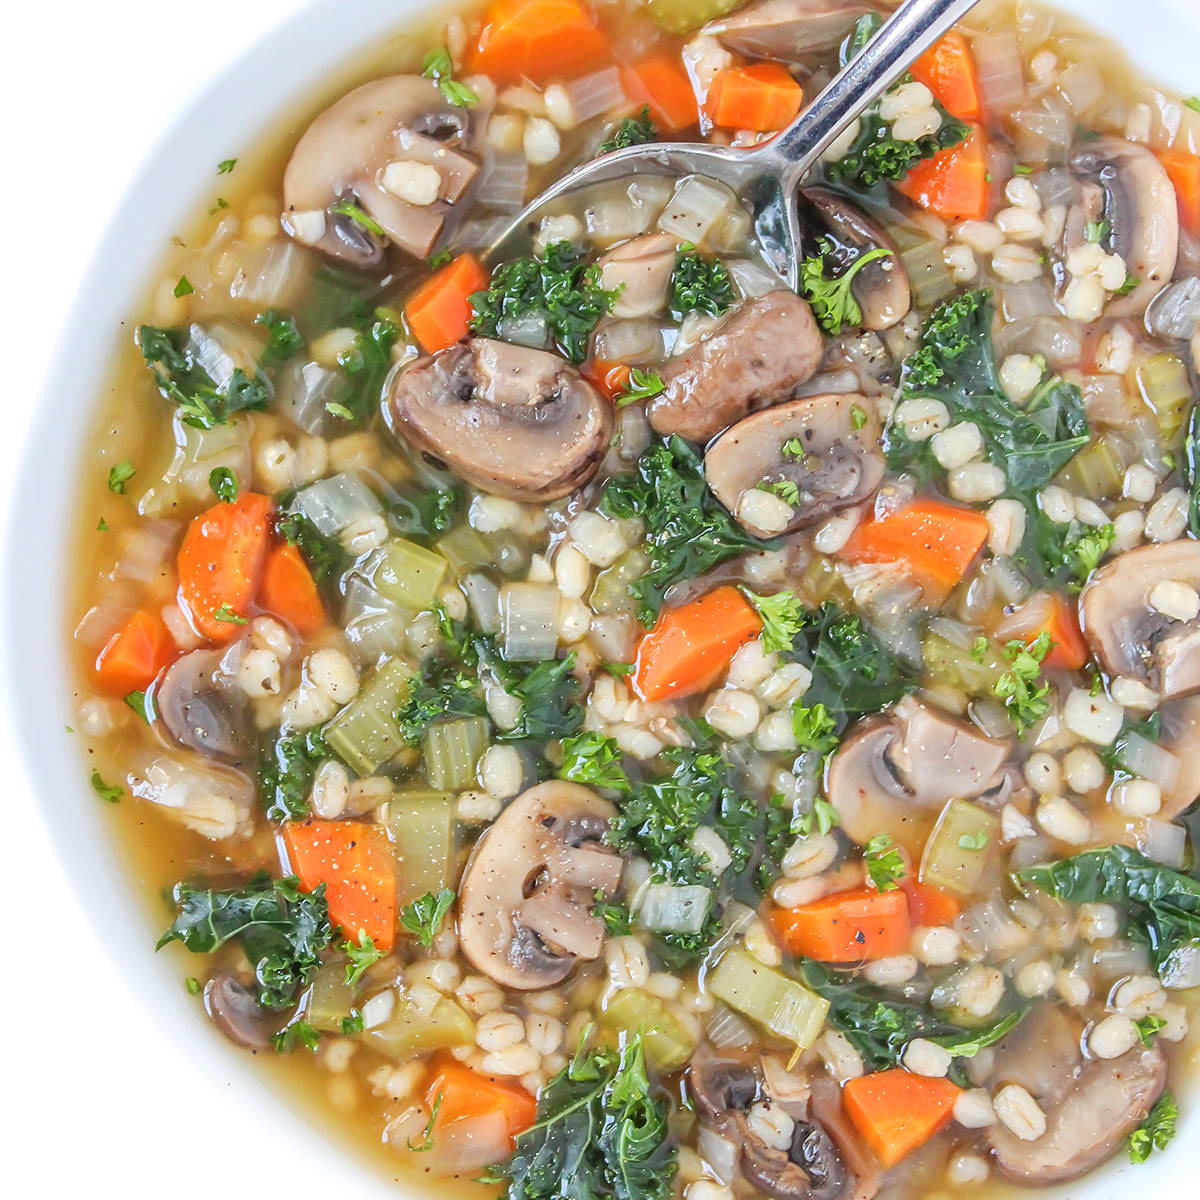 Vegan Mushroom Barley Soup • Salt & Lavender